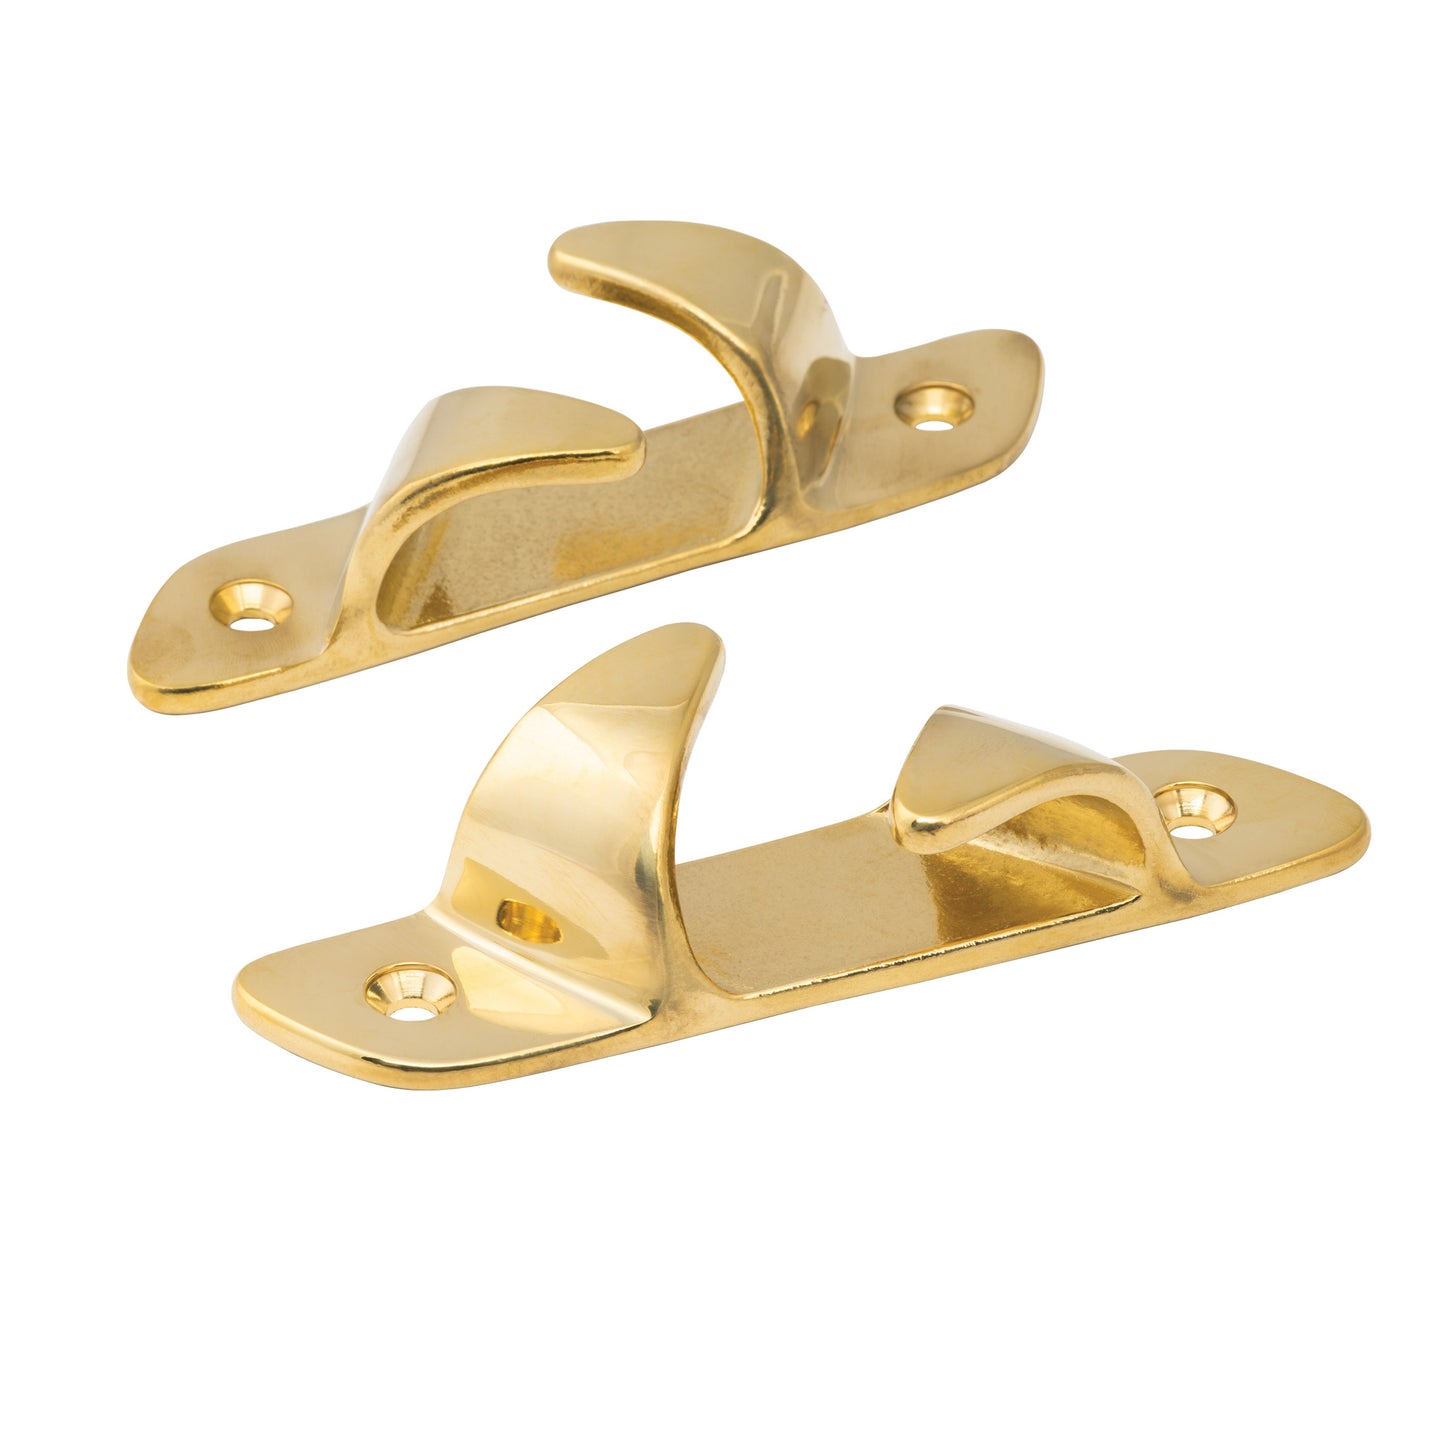 5-1/2" Polished Brass Skene Bow Chock